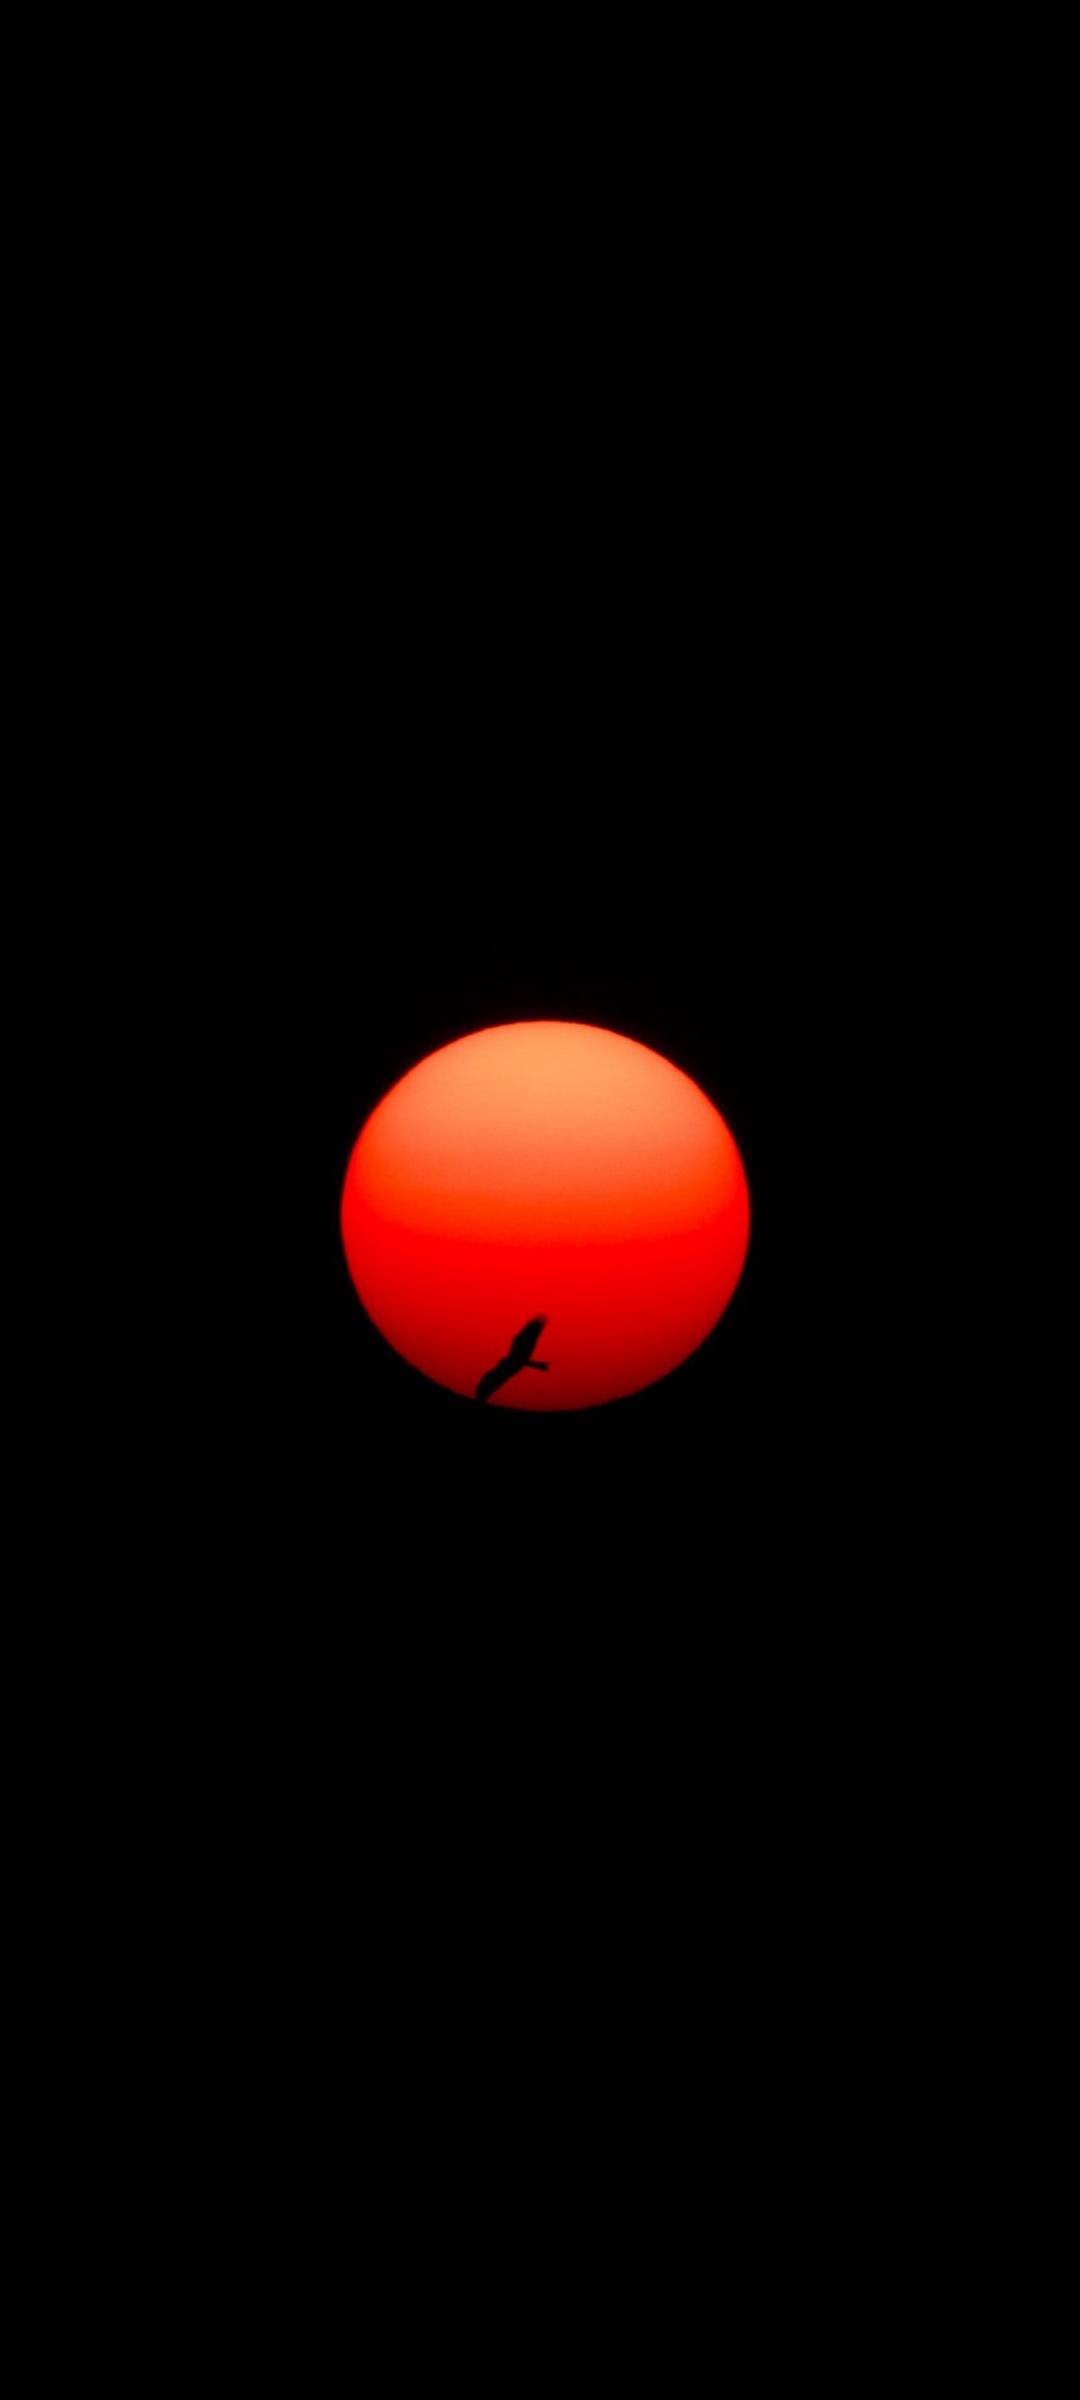 Red Sun